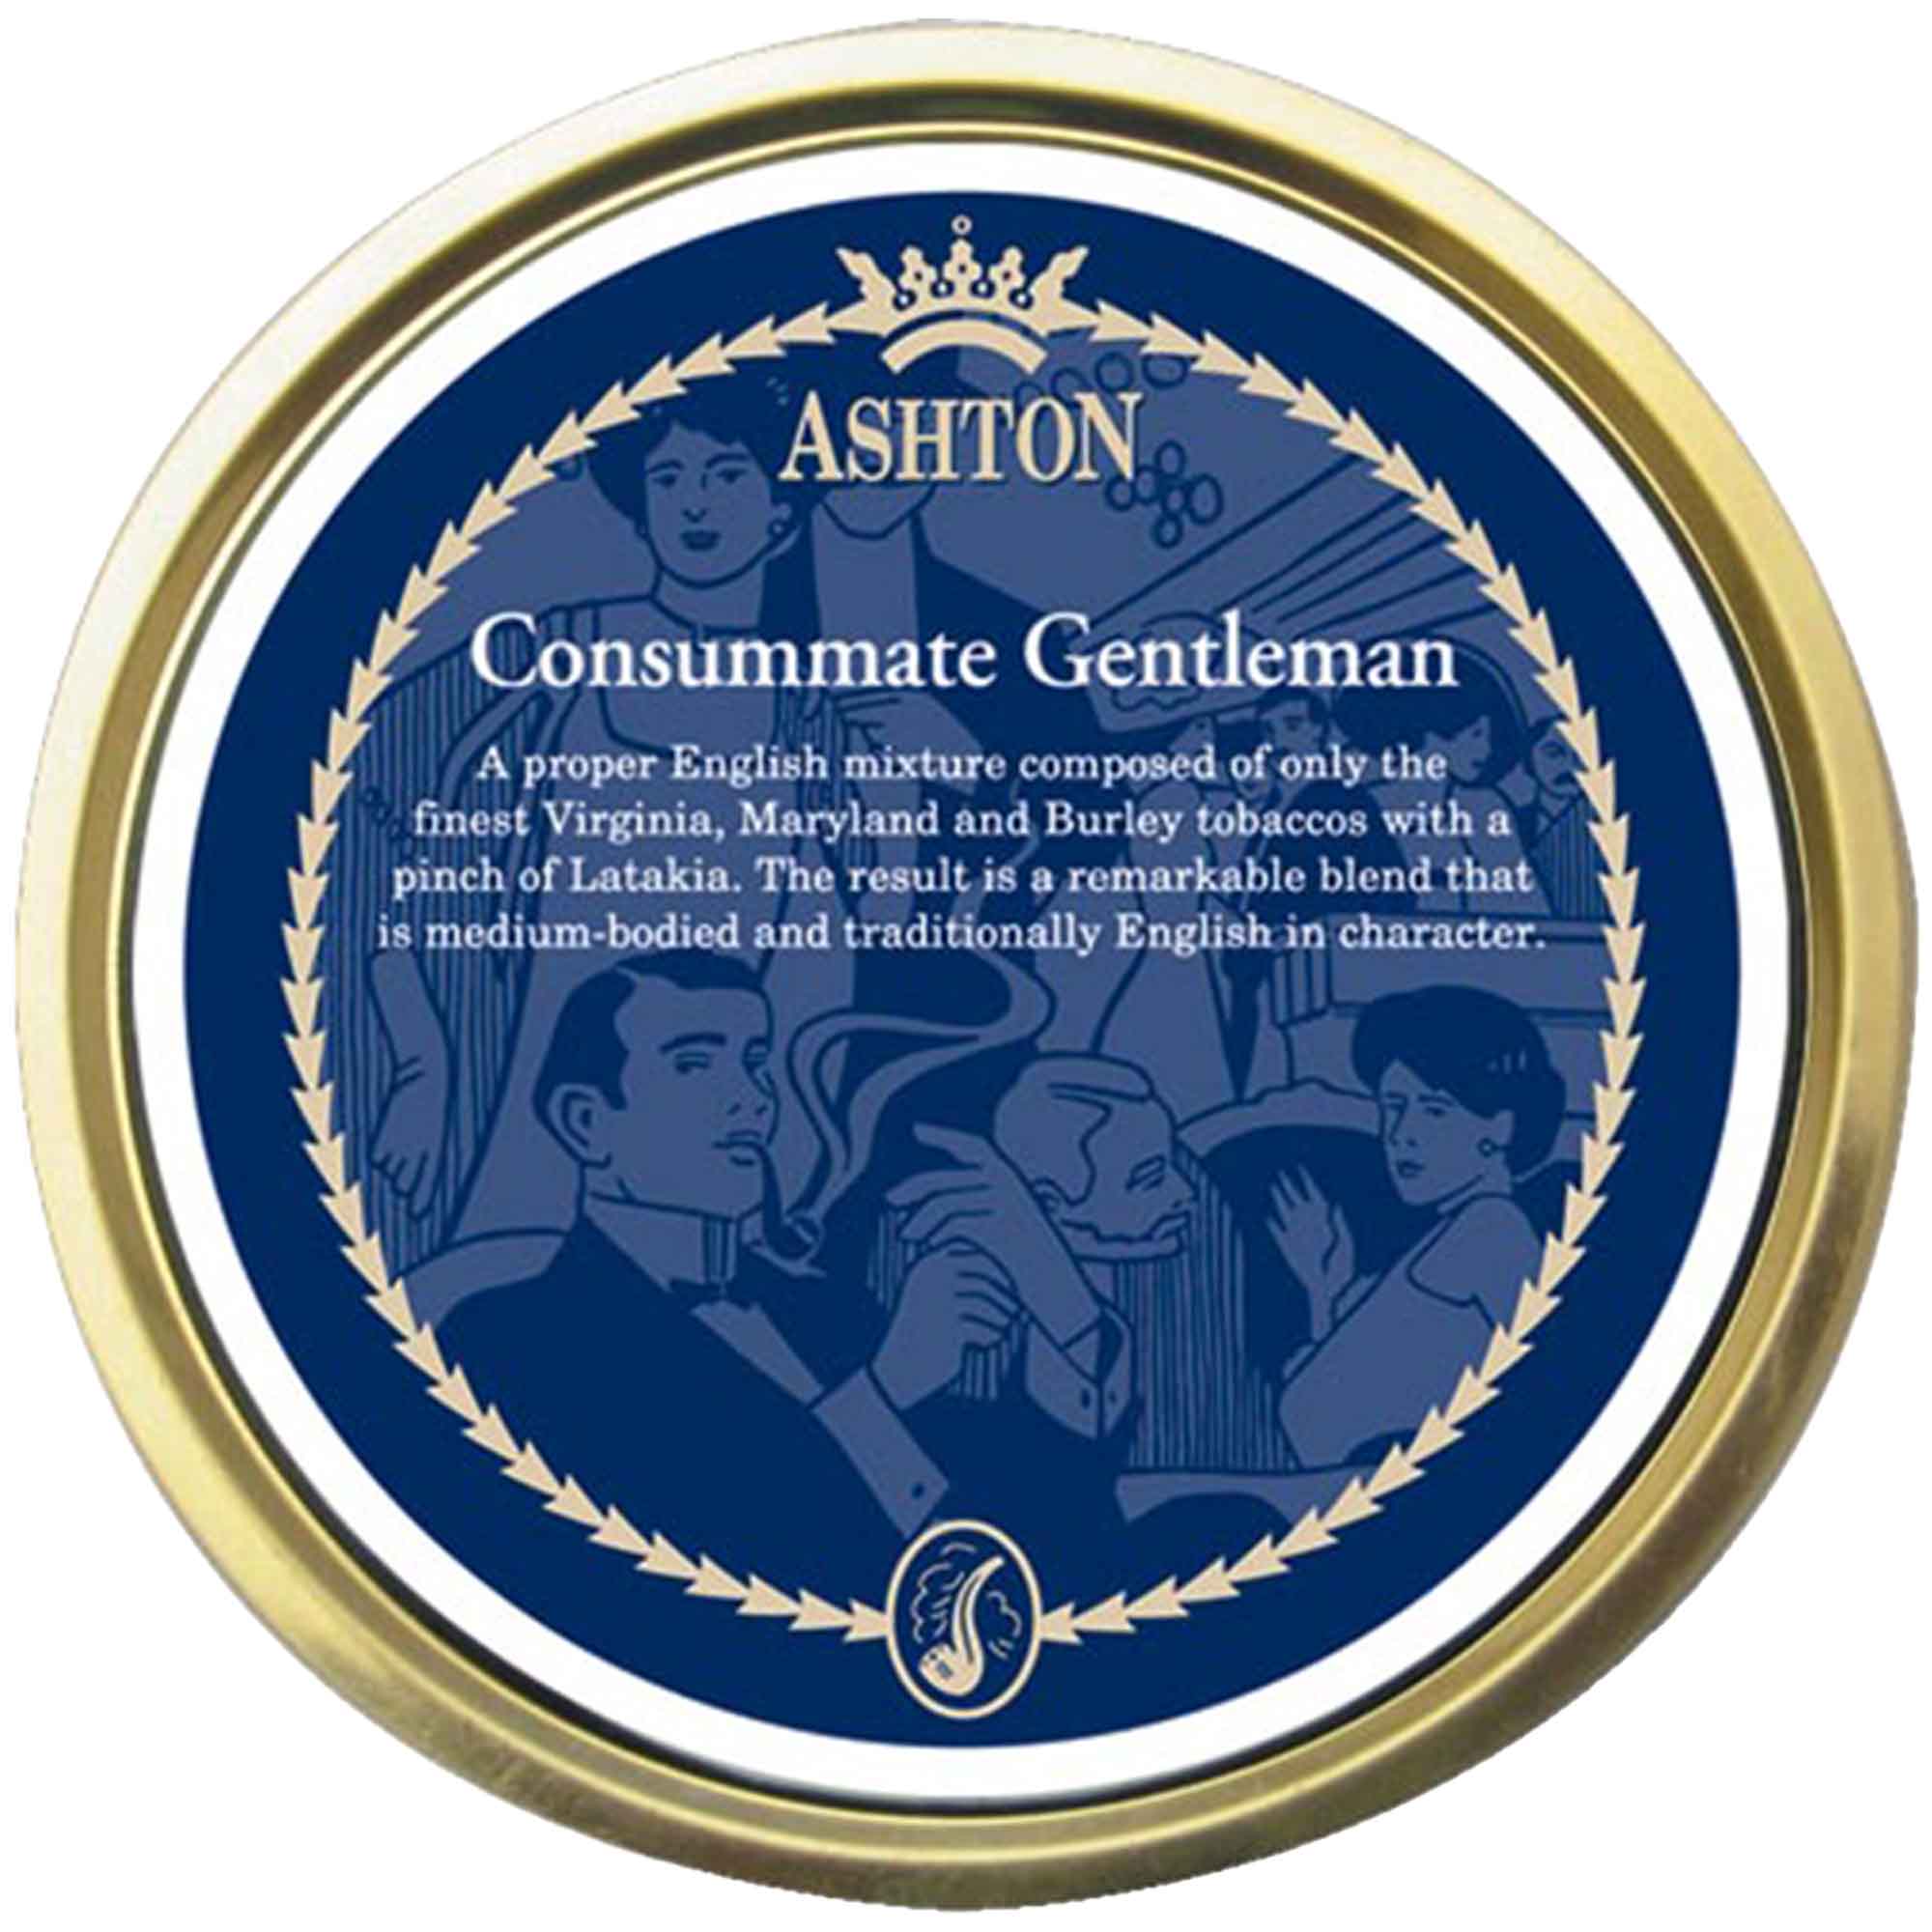 Ashton Consummate Gentleman